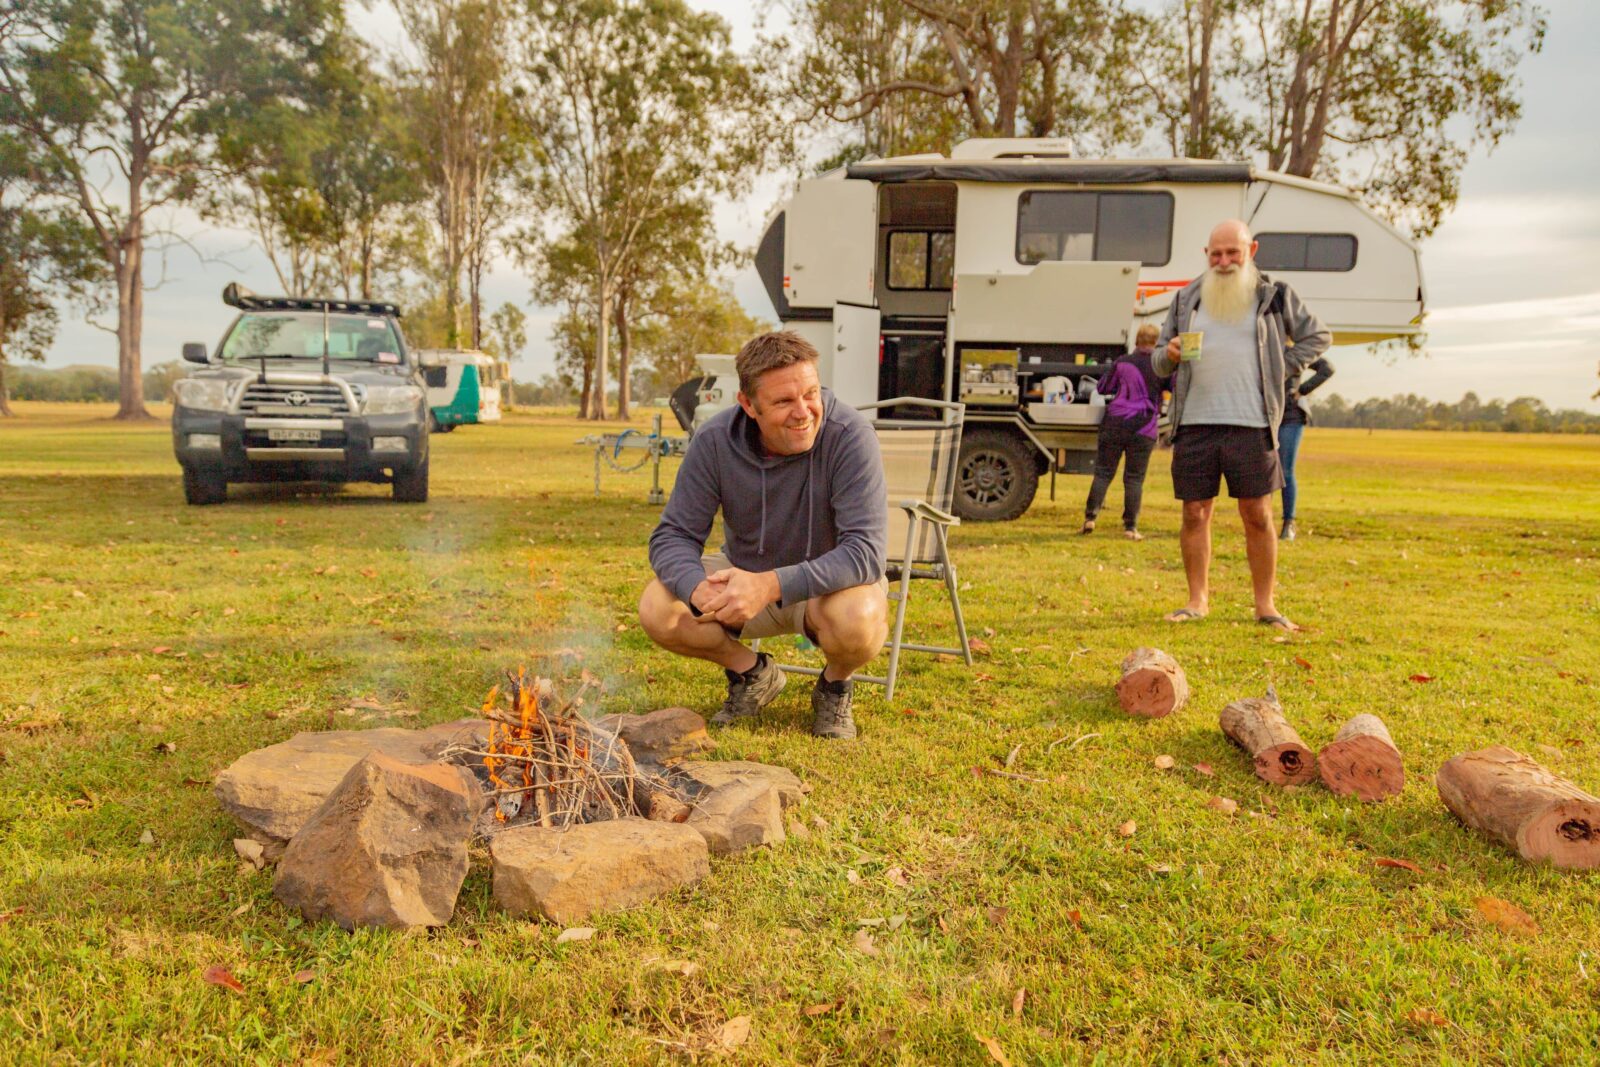 Man sitting around fire with caravan in background